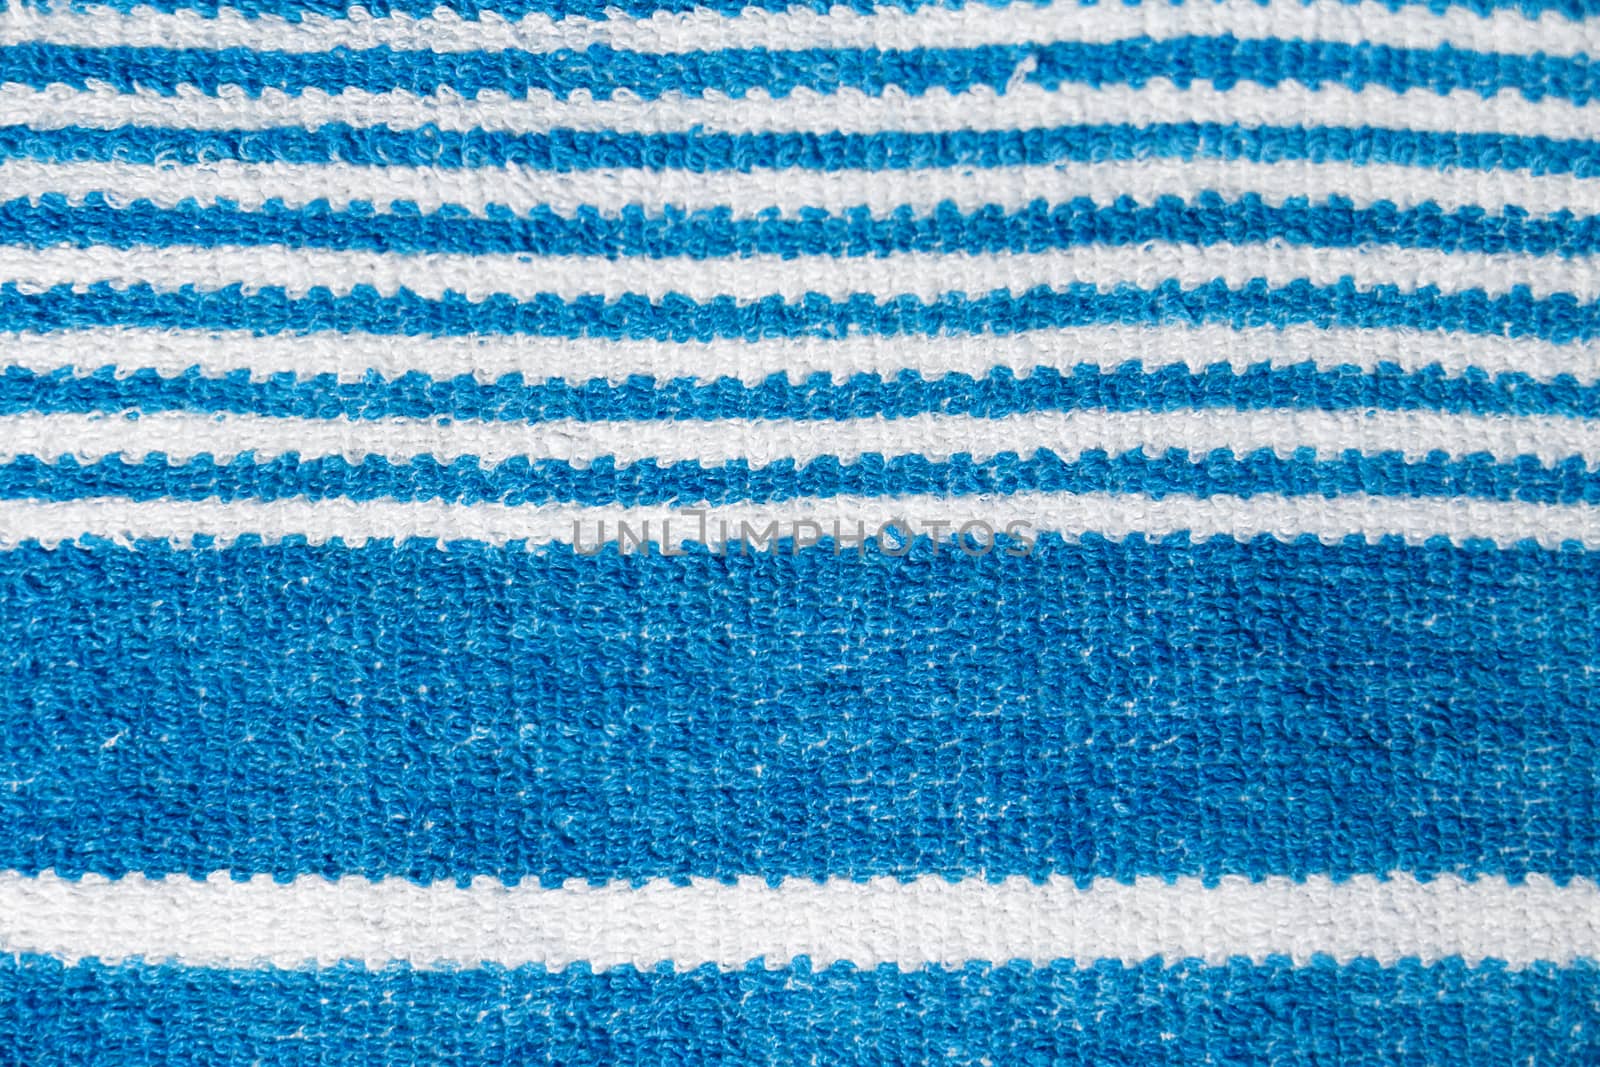 Towel with blue stripes. macro photography by pzRomashka